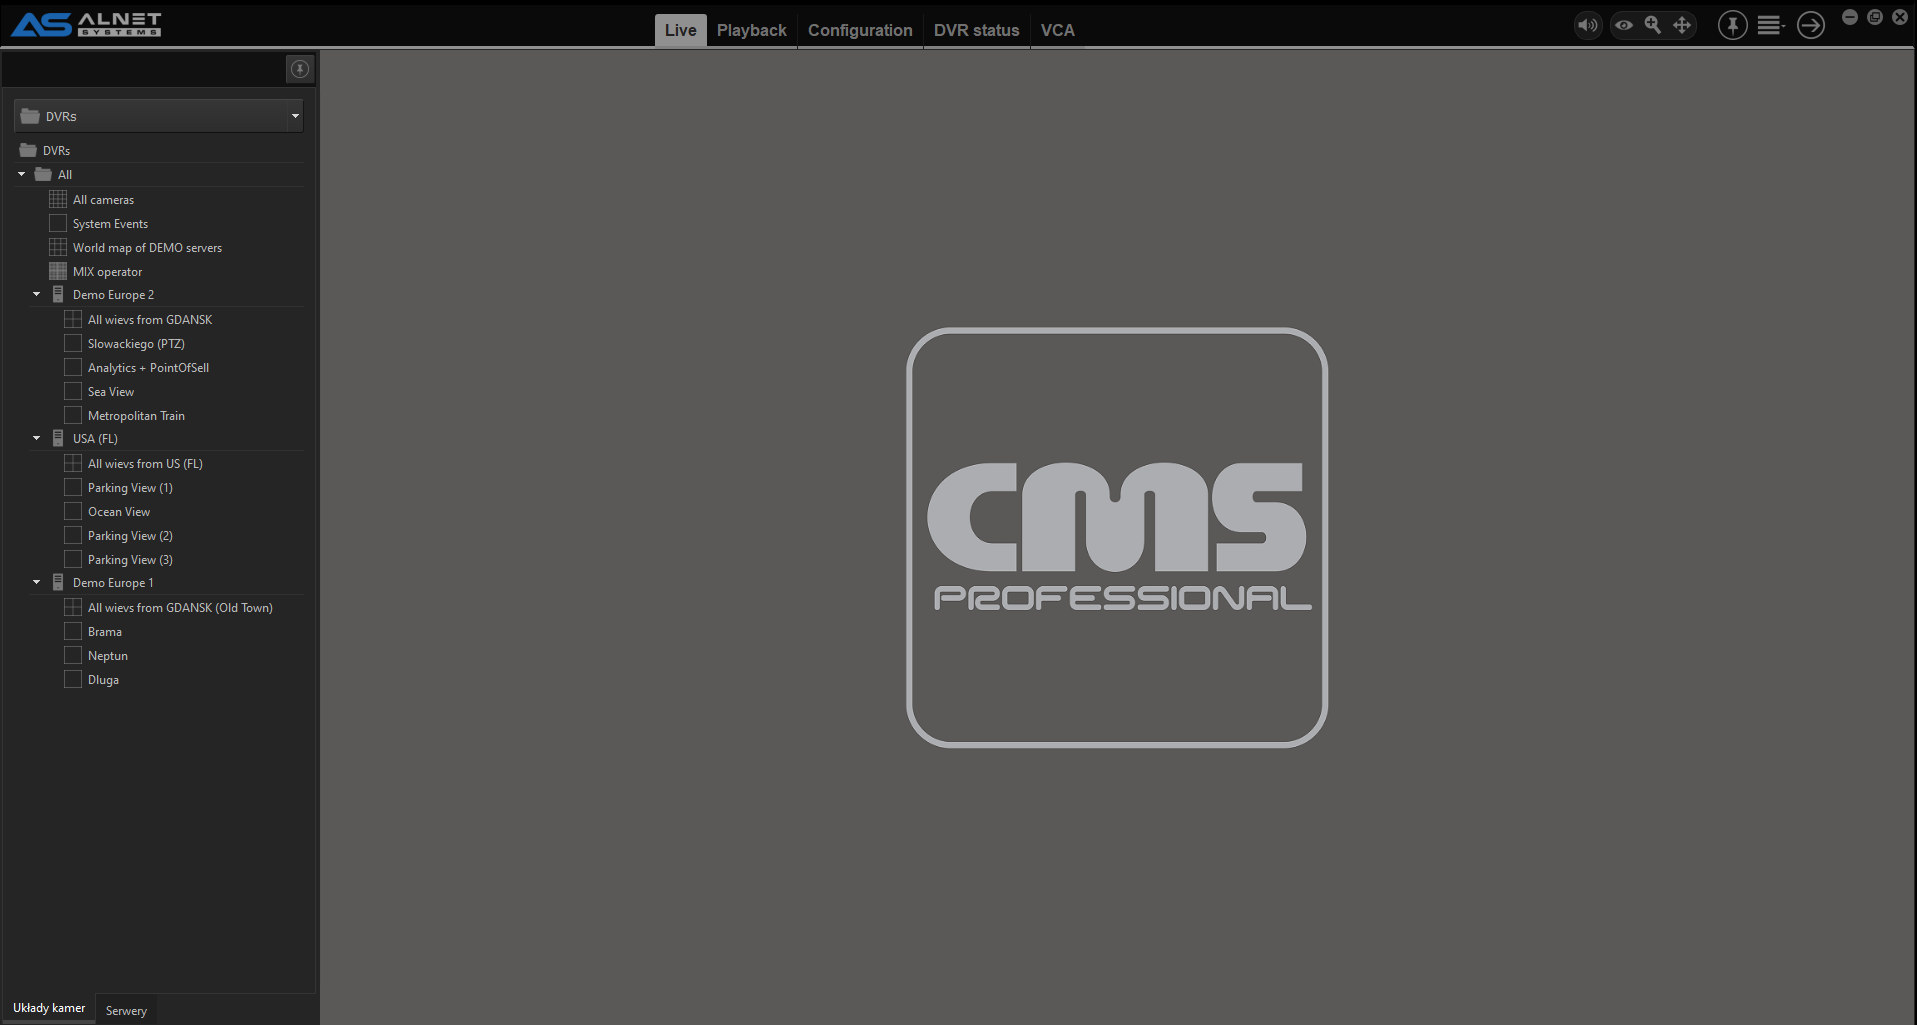 cms cctv software h 264